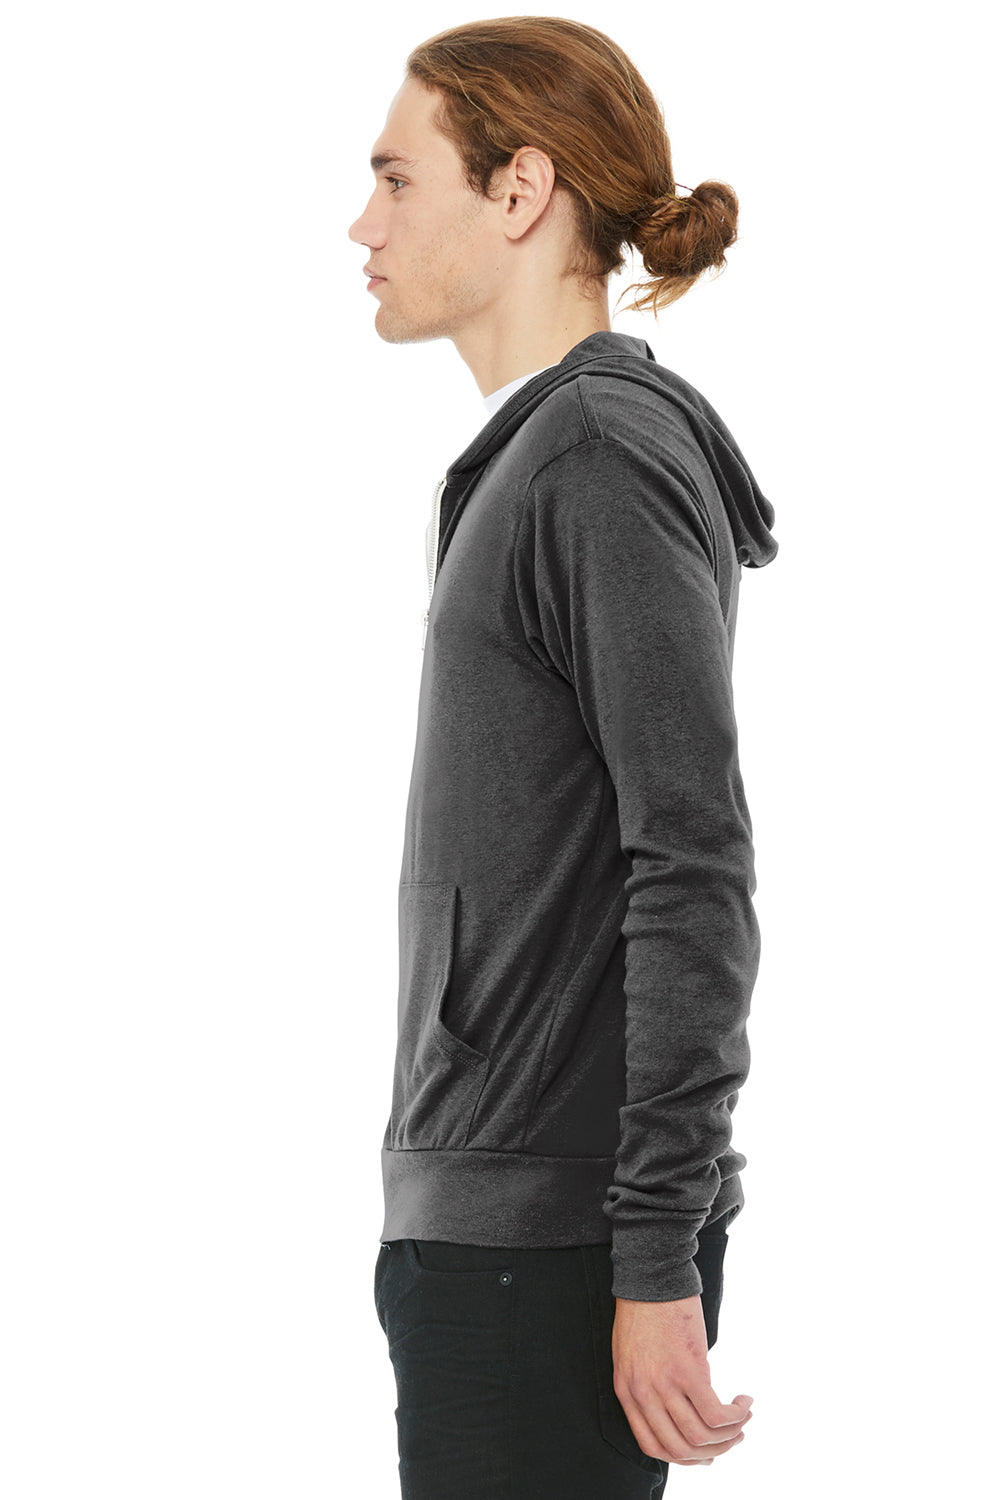 Bella + Canvas BC3939/3939 Mens Full Zip Long Sleeve Hooded T-Shirt Hoodie Charcoal Black Model Side